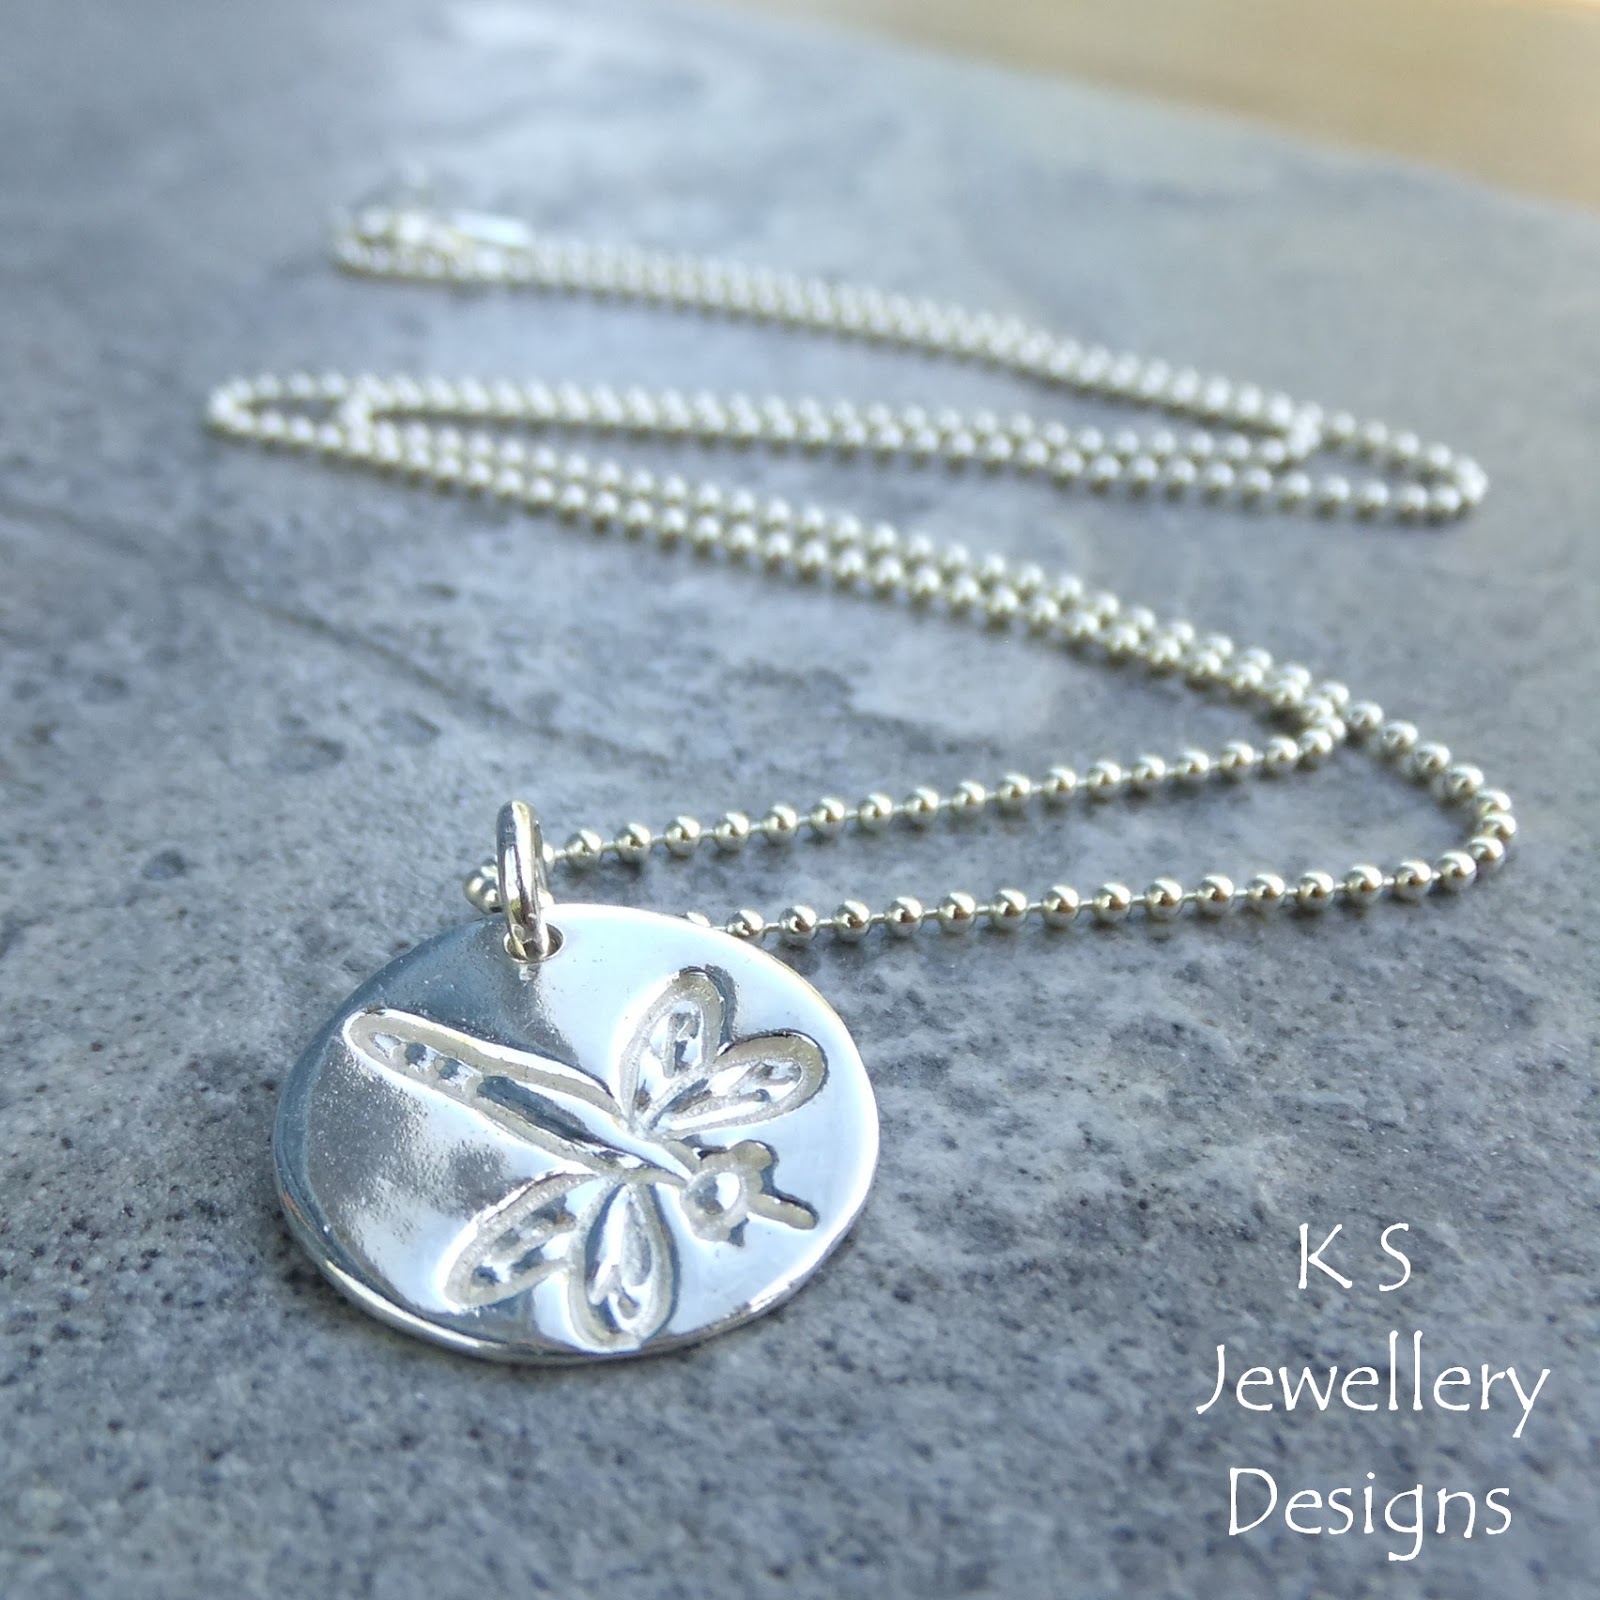 K S Jewellery Designs Silver Clay Pendants